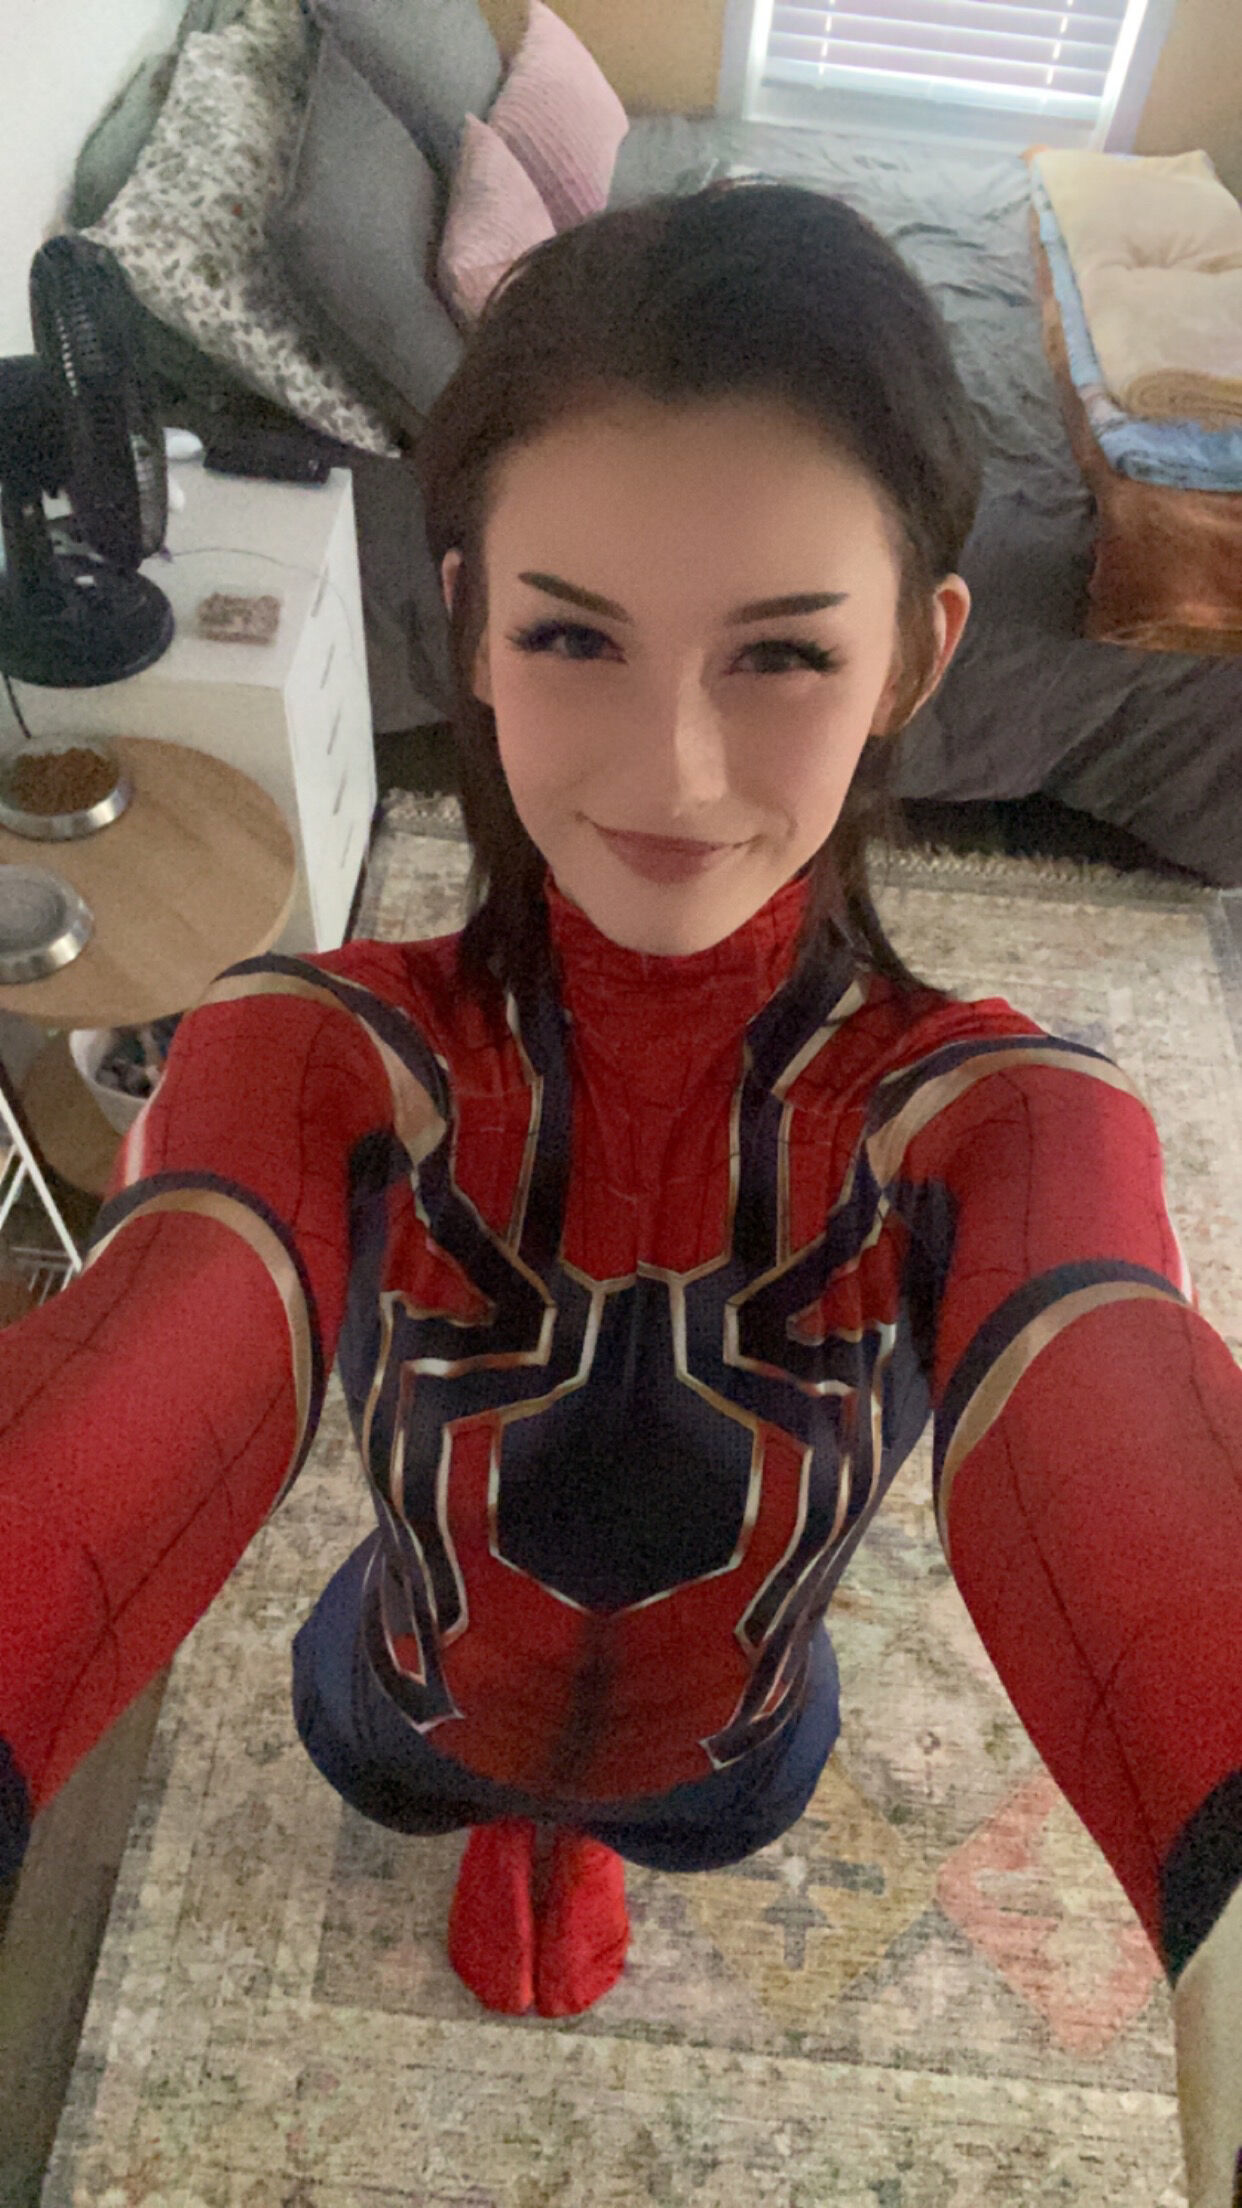 [Madison Stepka] Spider-Man Suit